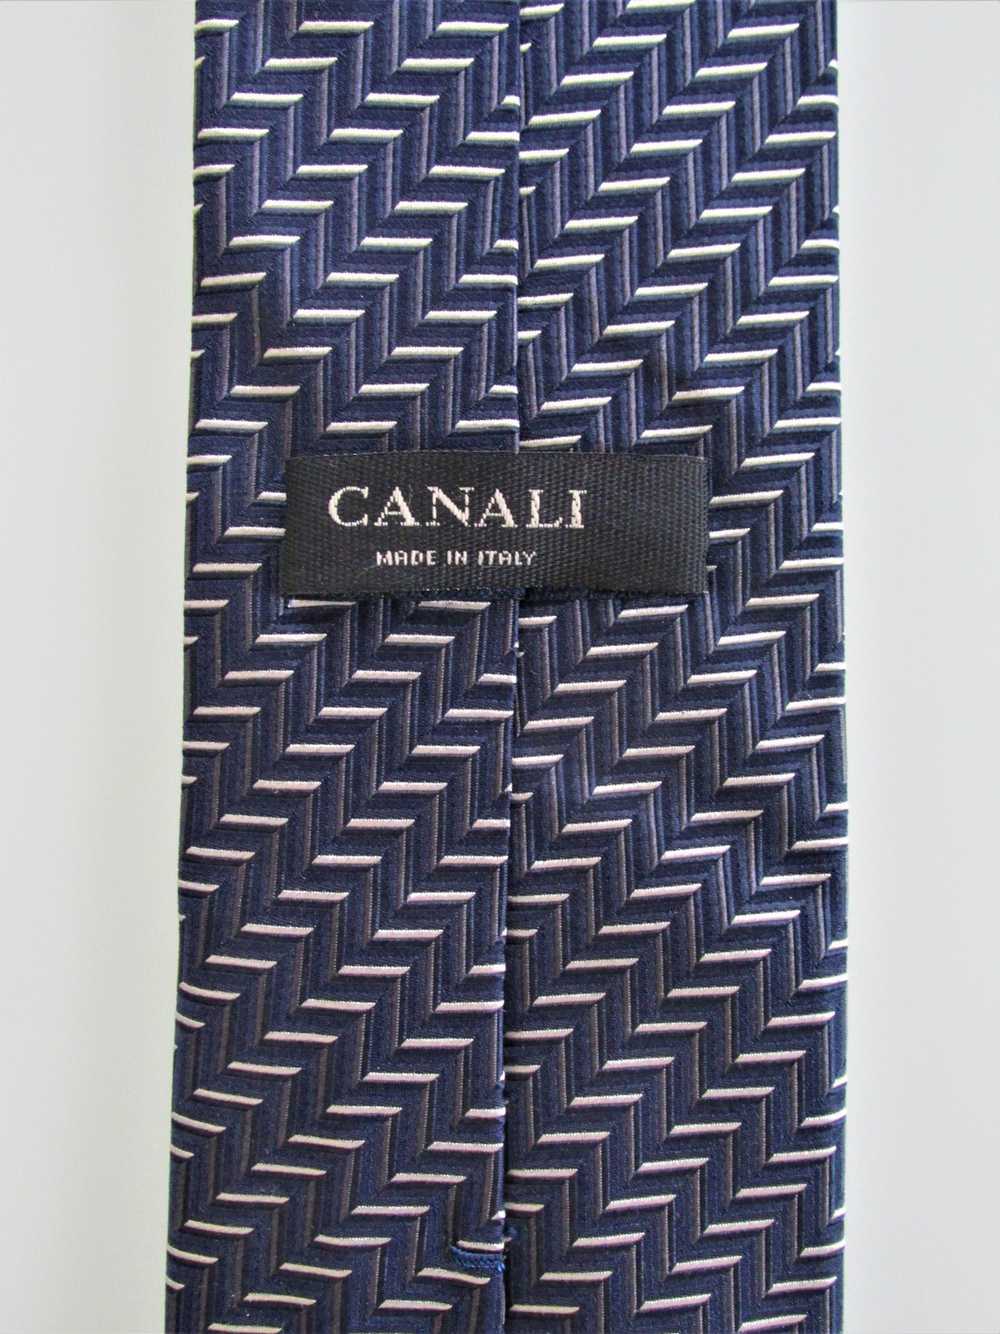 Canali Canali Men's Silk Tie - image 4